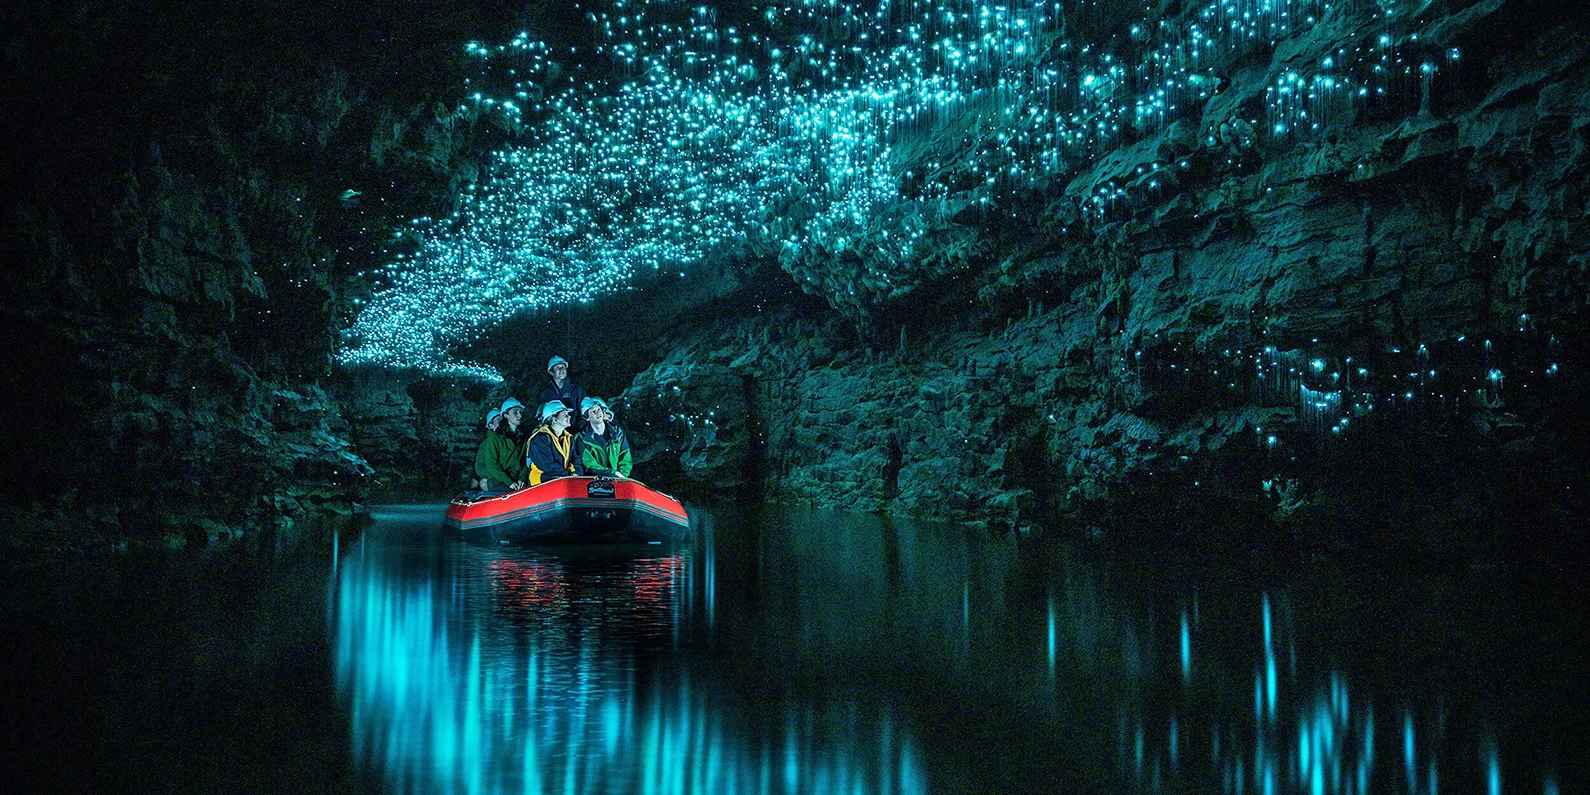 grotte de waitomo nz